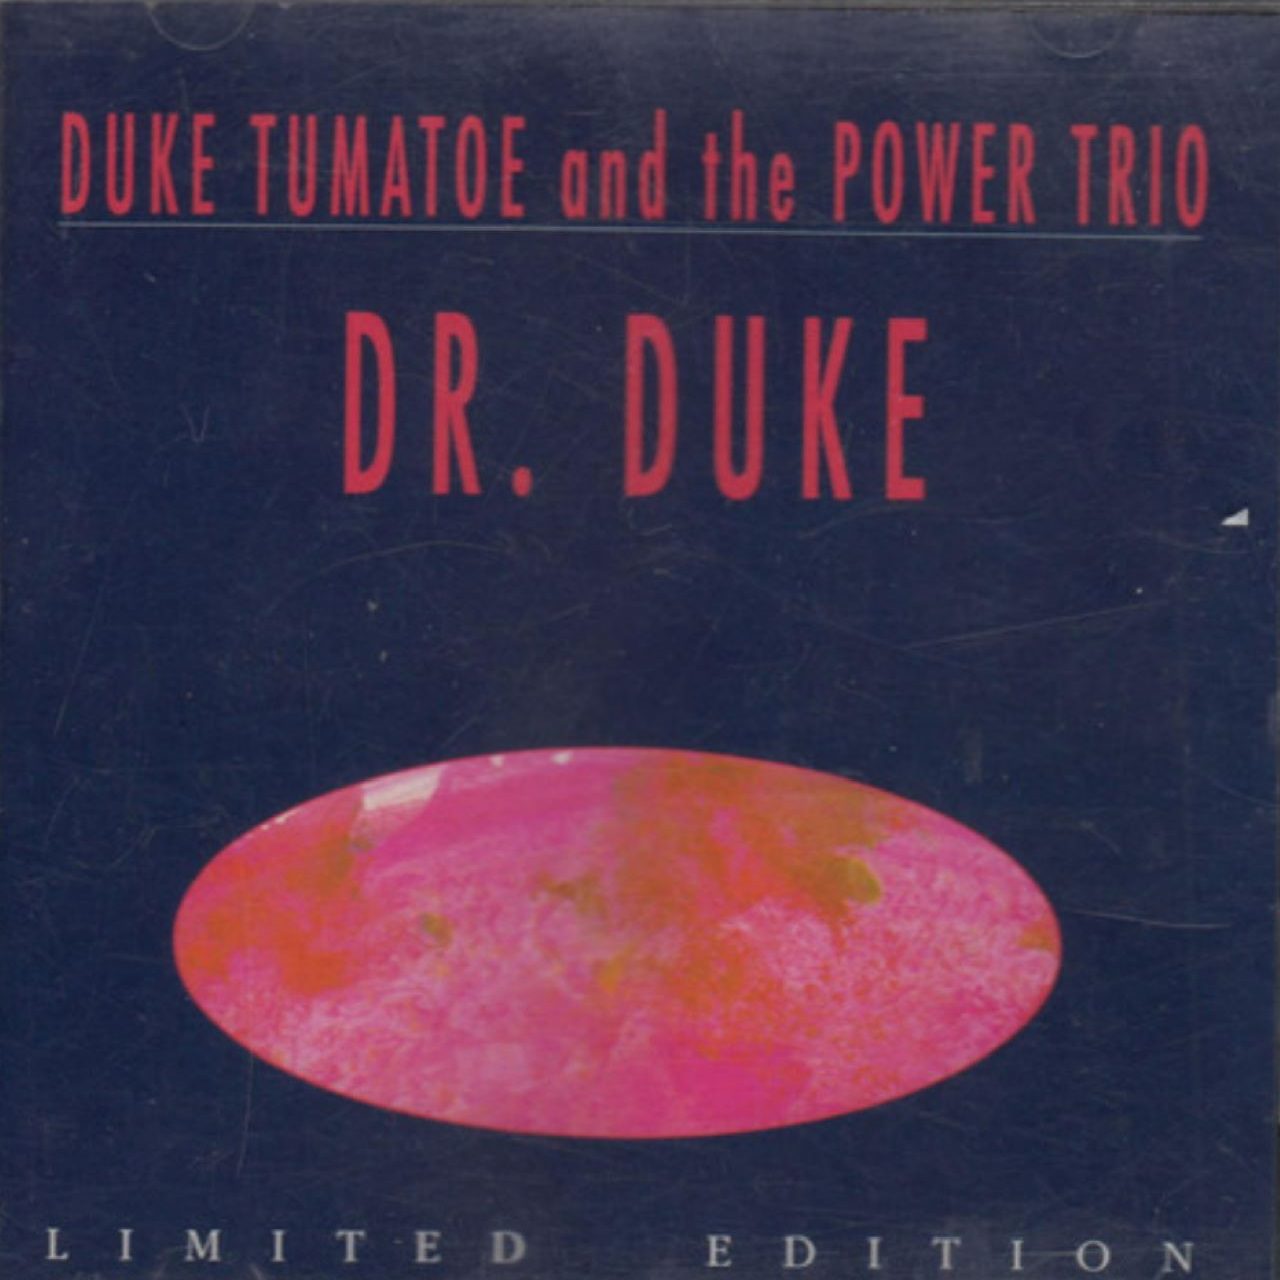 Duke Tumatoe And The Power Trio – Dr. Duke cover album